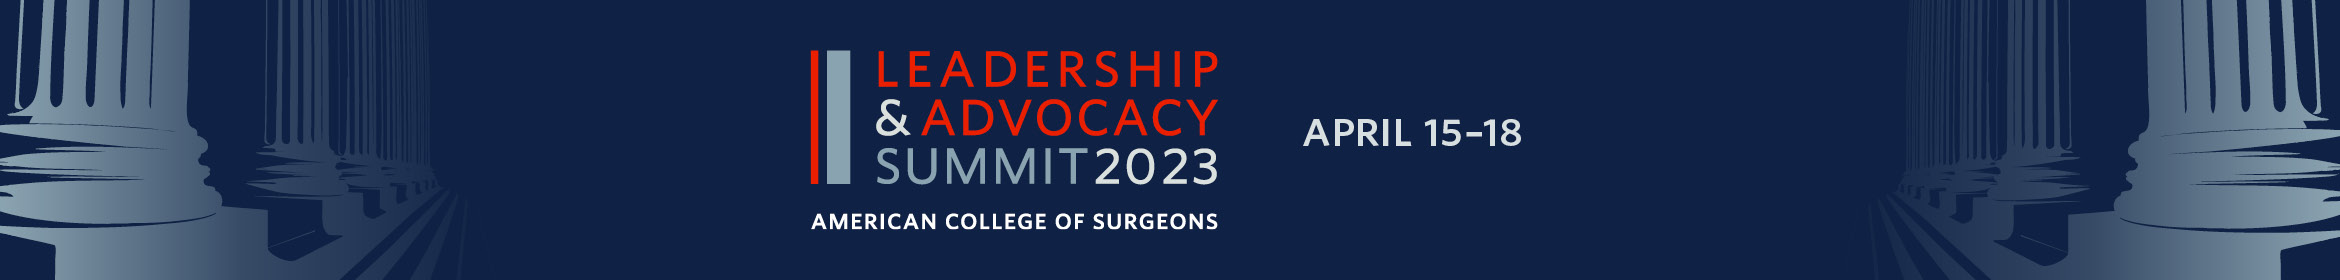 2023 Leadership Summit Main banner